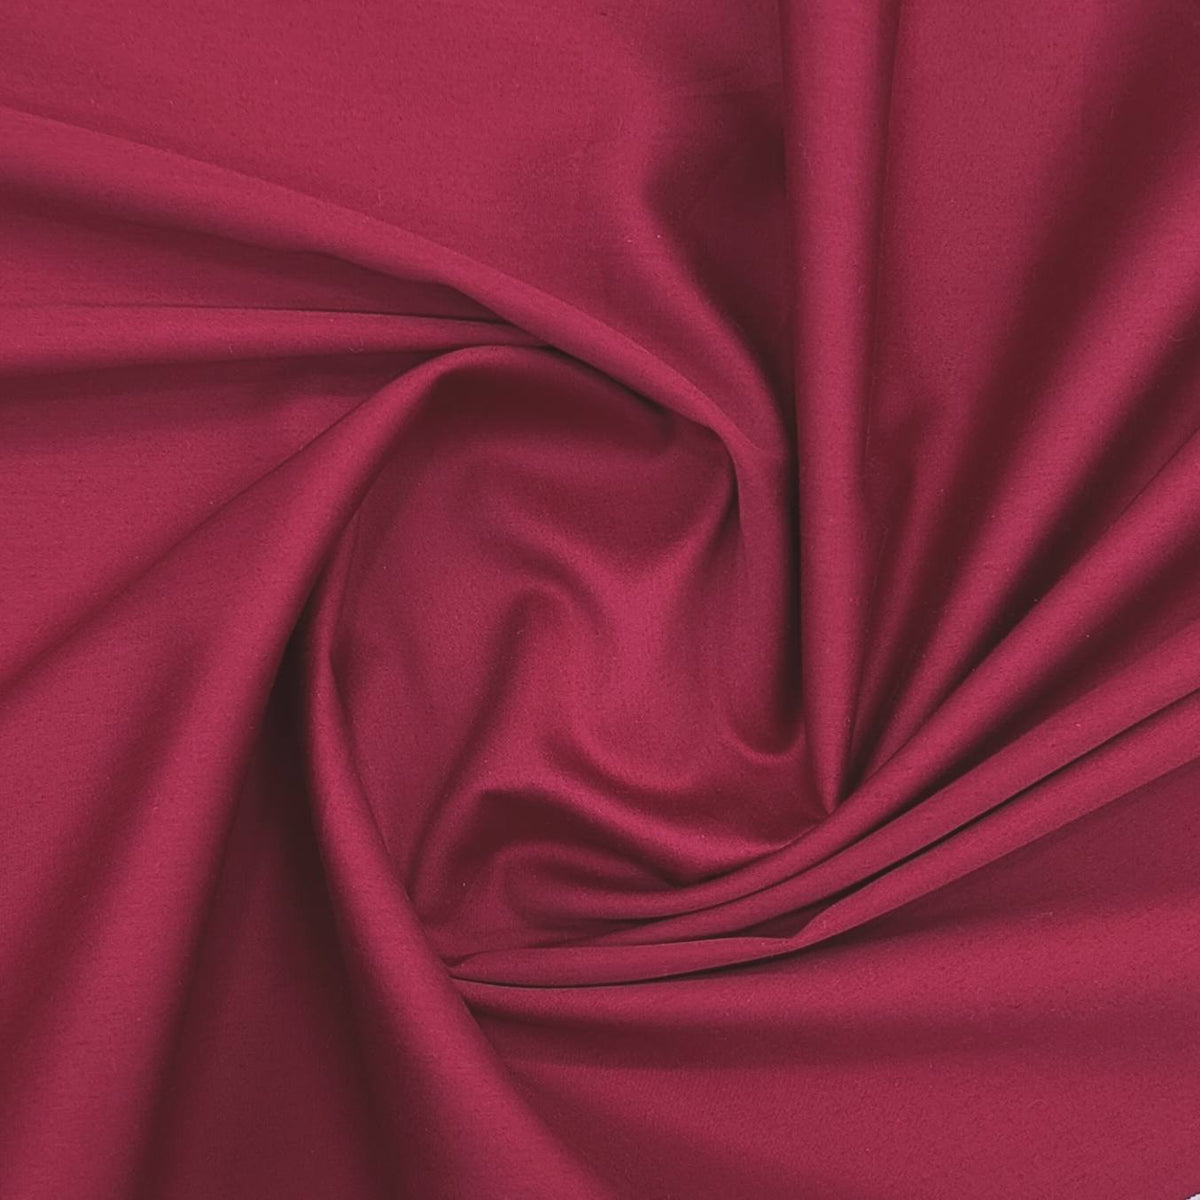 Birla Century Men’s 70’s Giza Cotton Solids Unstitched Shirting Fabric (Mild Red)